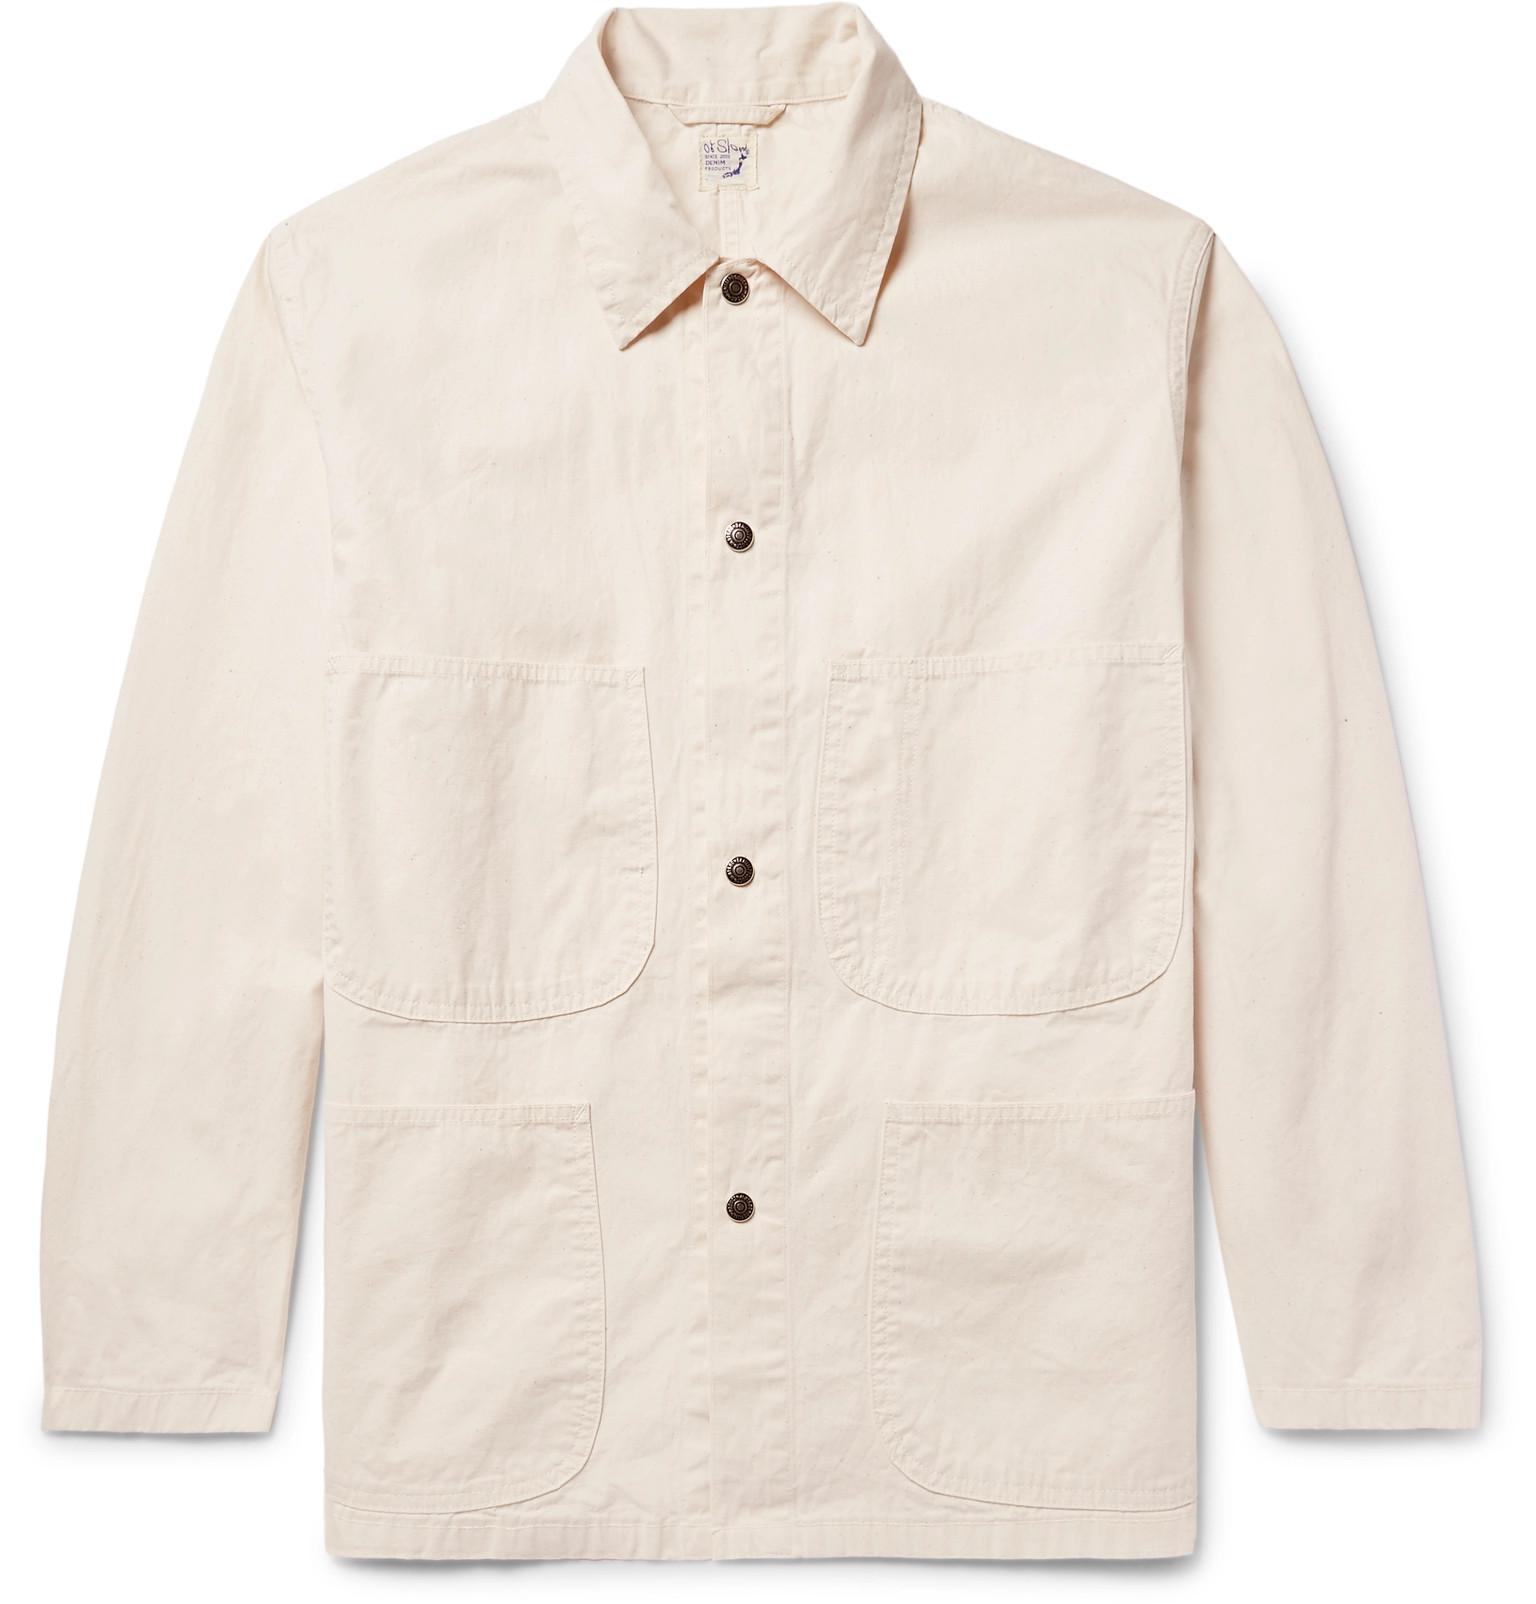 Orslow Slub Cotton Chore Jacket in Cream (Natural) for Men - Lyst